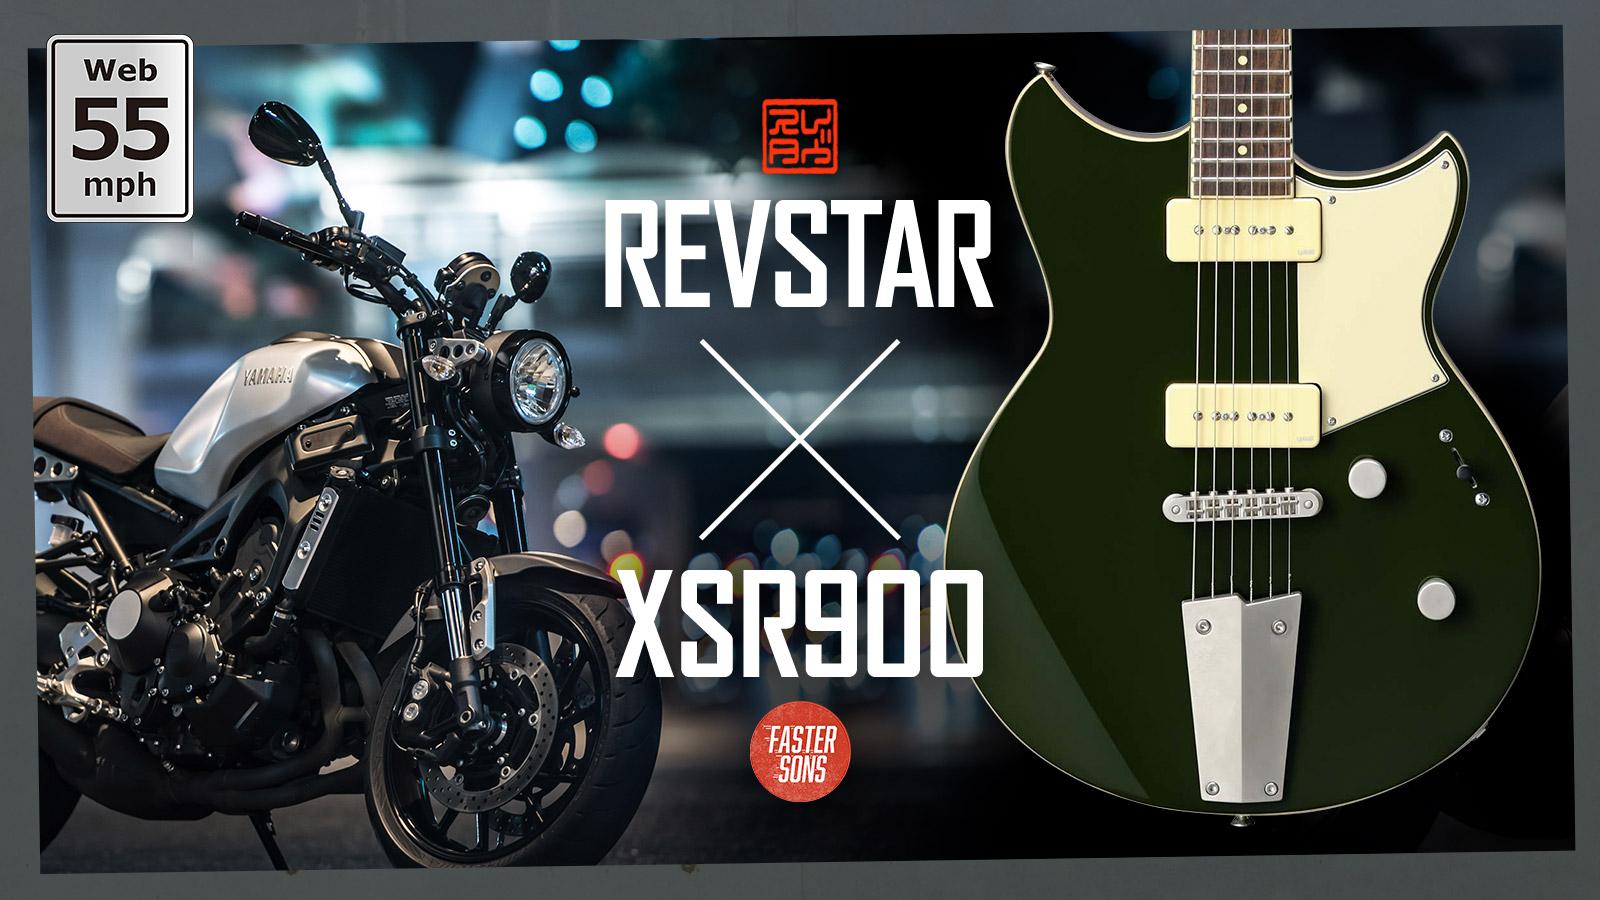 「REVSTAR」×「XSR900」FASTER SONS仕様コラボ展示